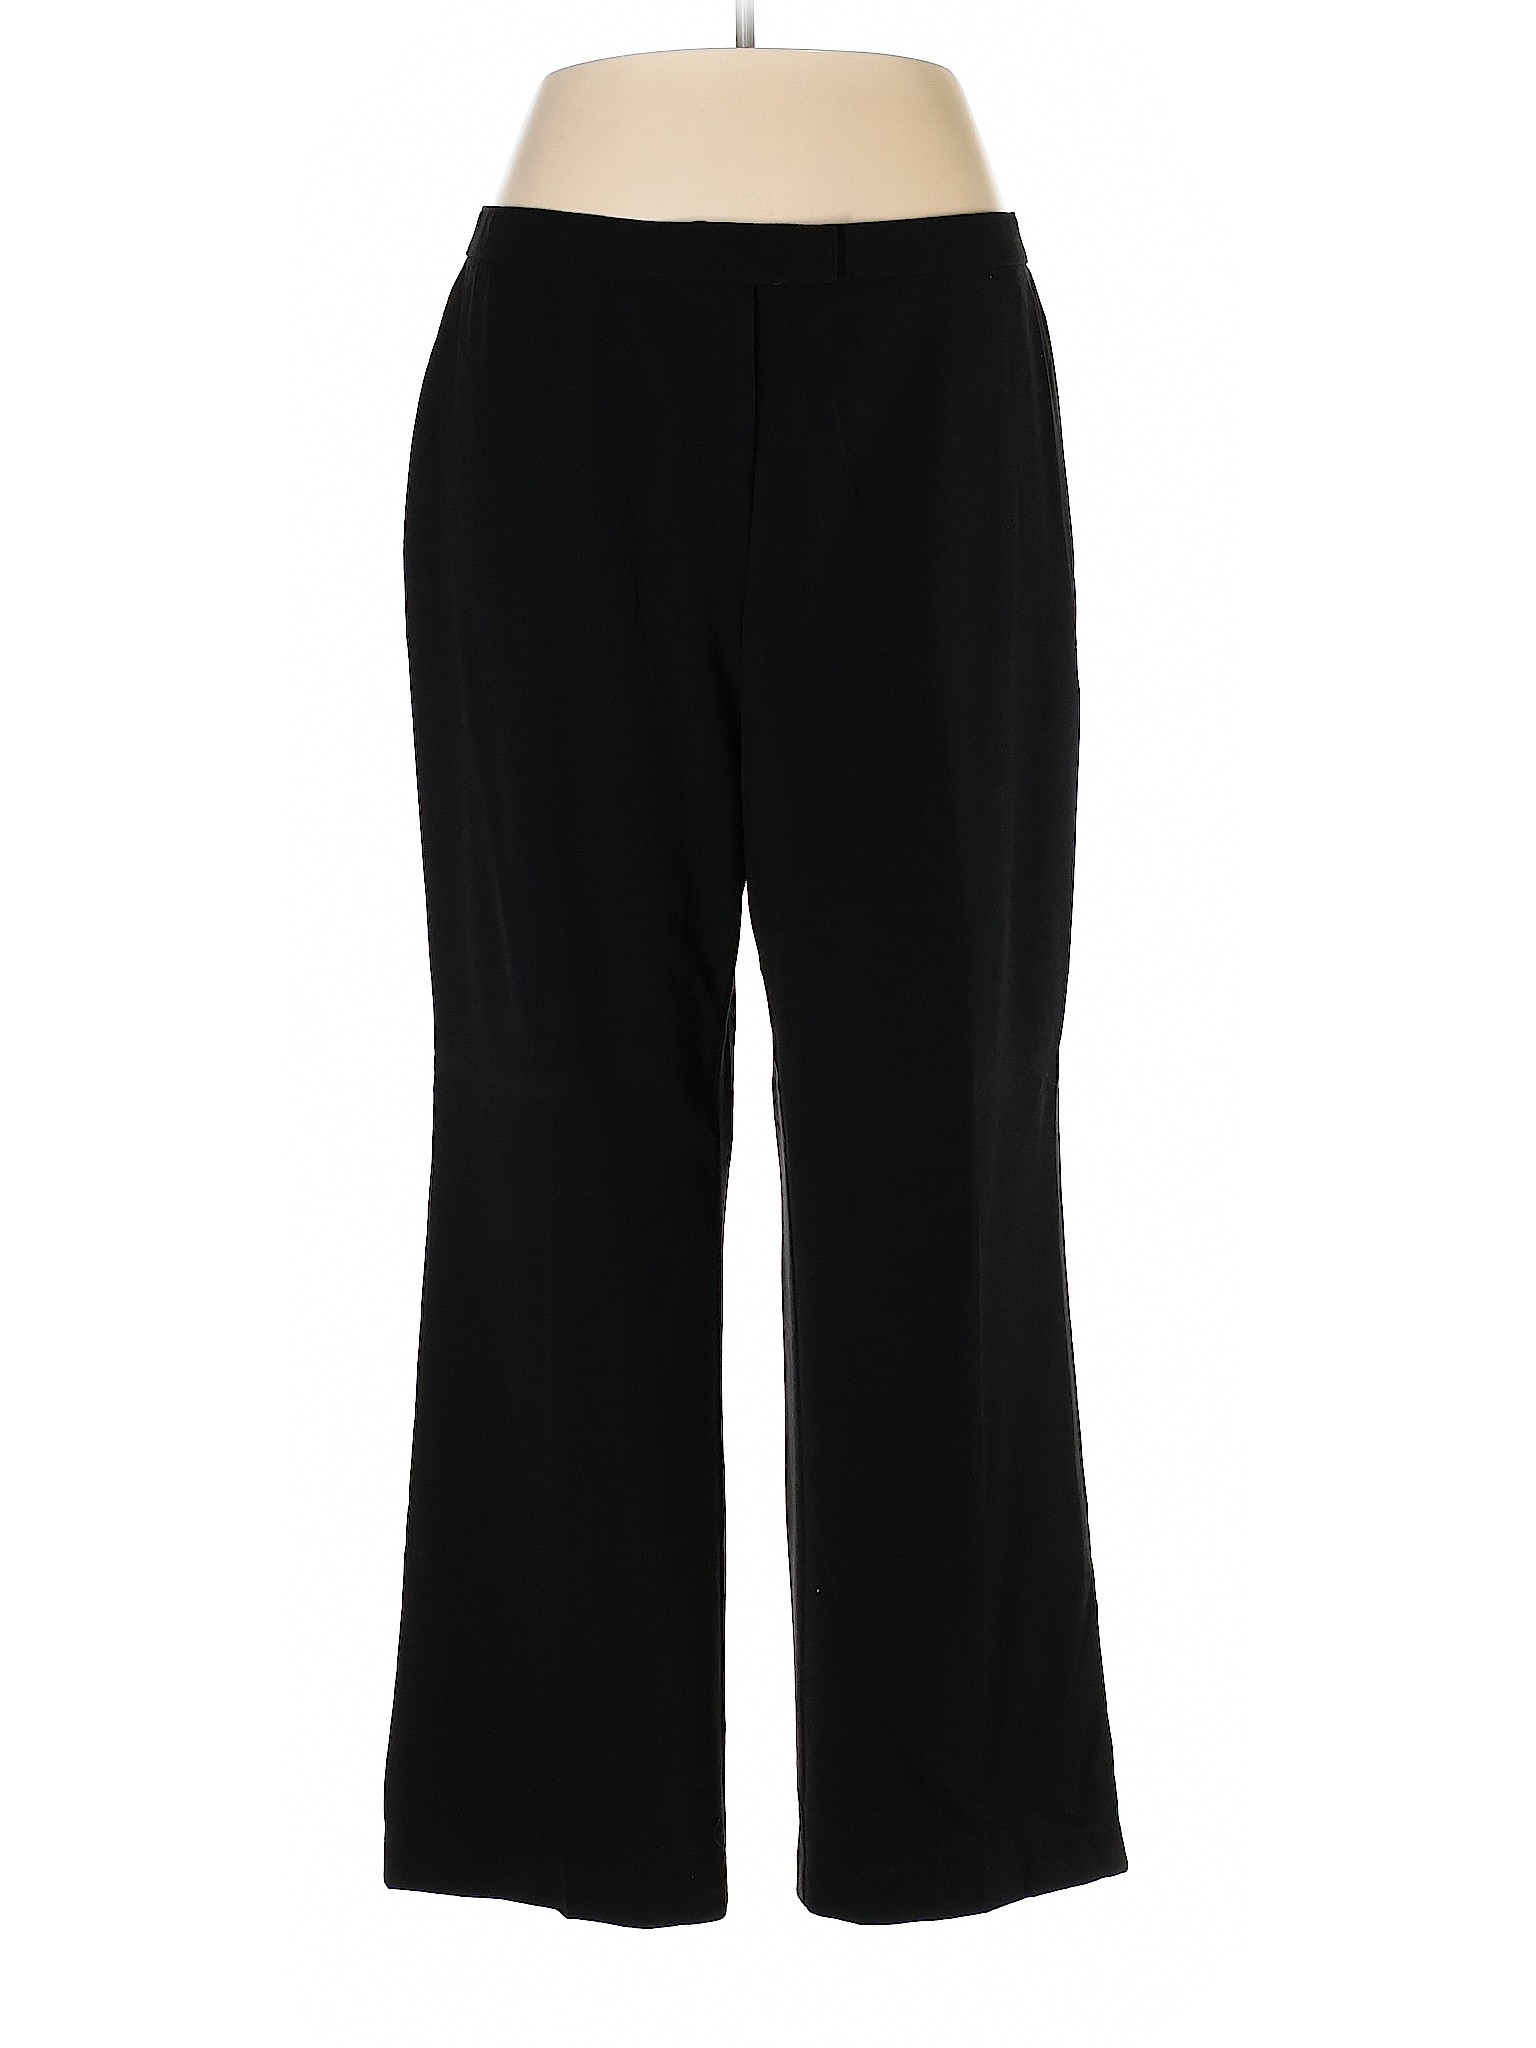 Sag Harbor Women Black Dress Pants 18 Plus | eBay